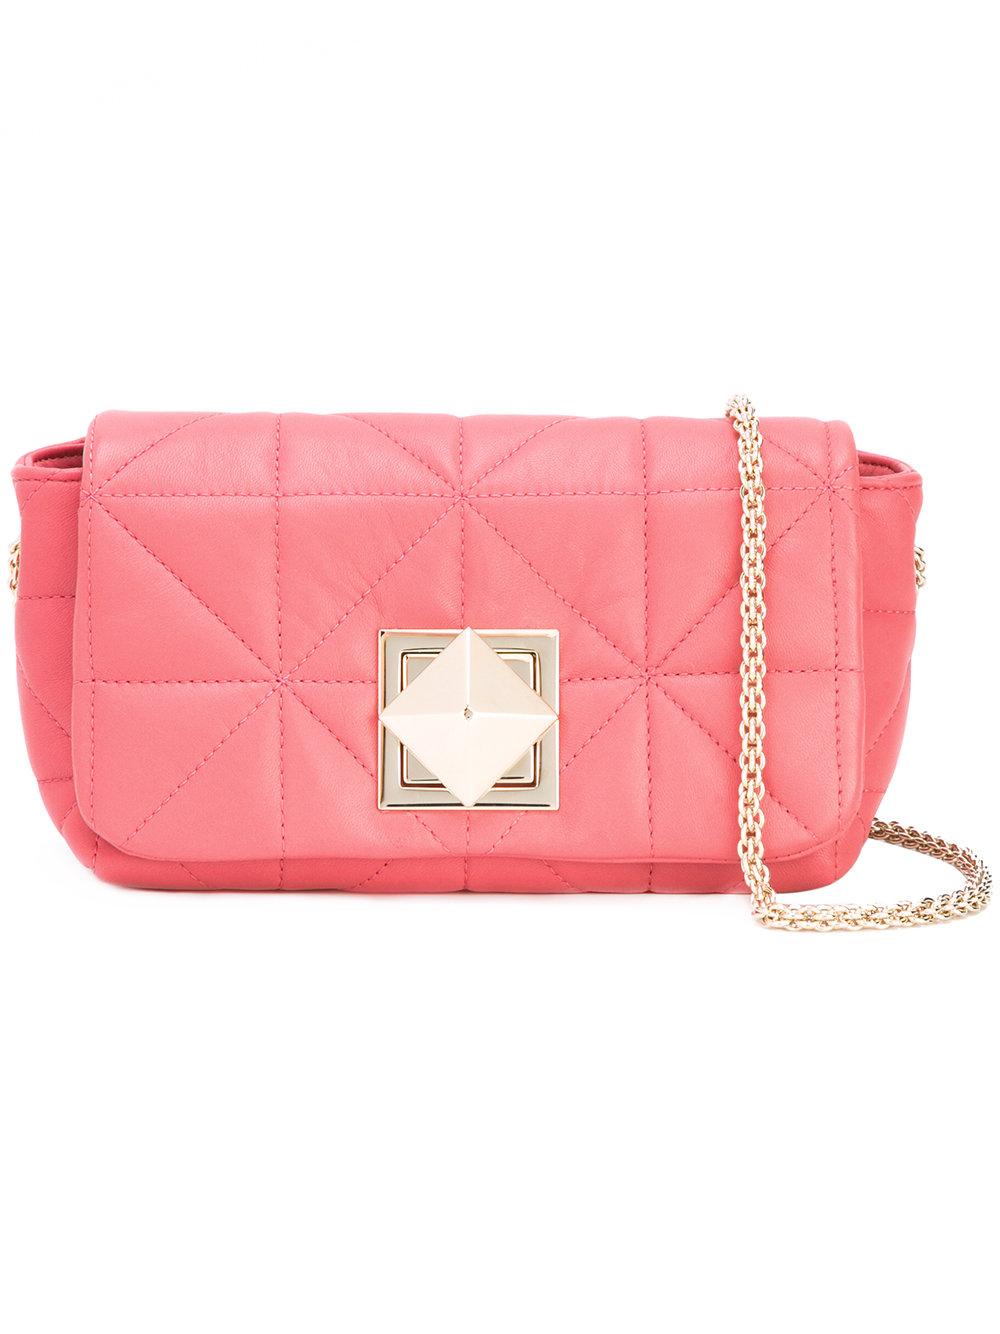 Lyst - Sonia rykiel Chain Strap Shoulder Bag in Pink